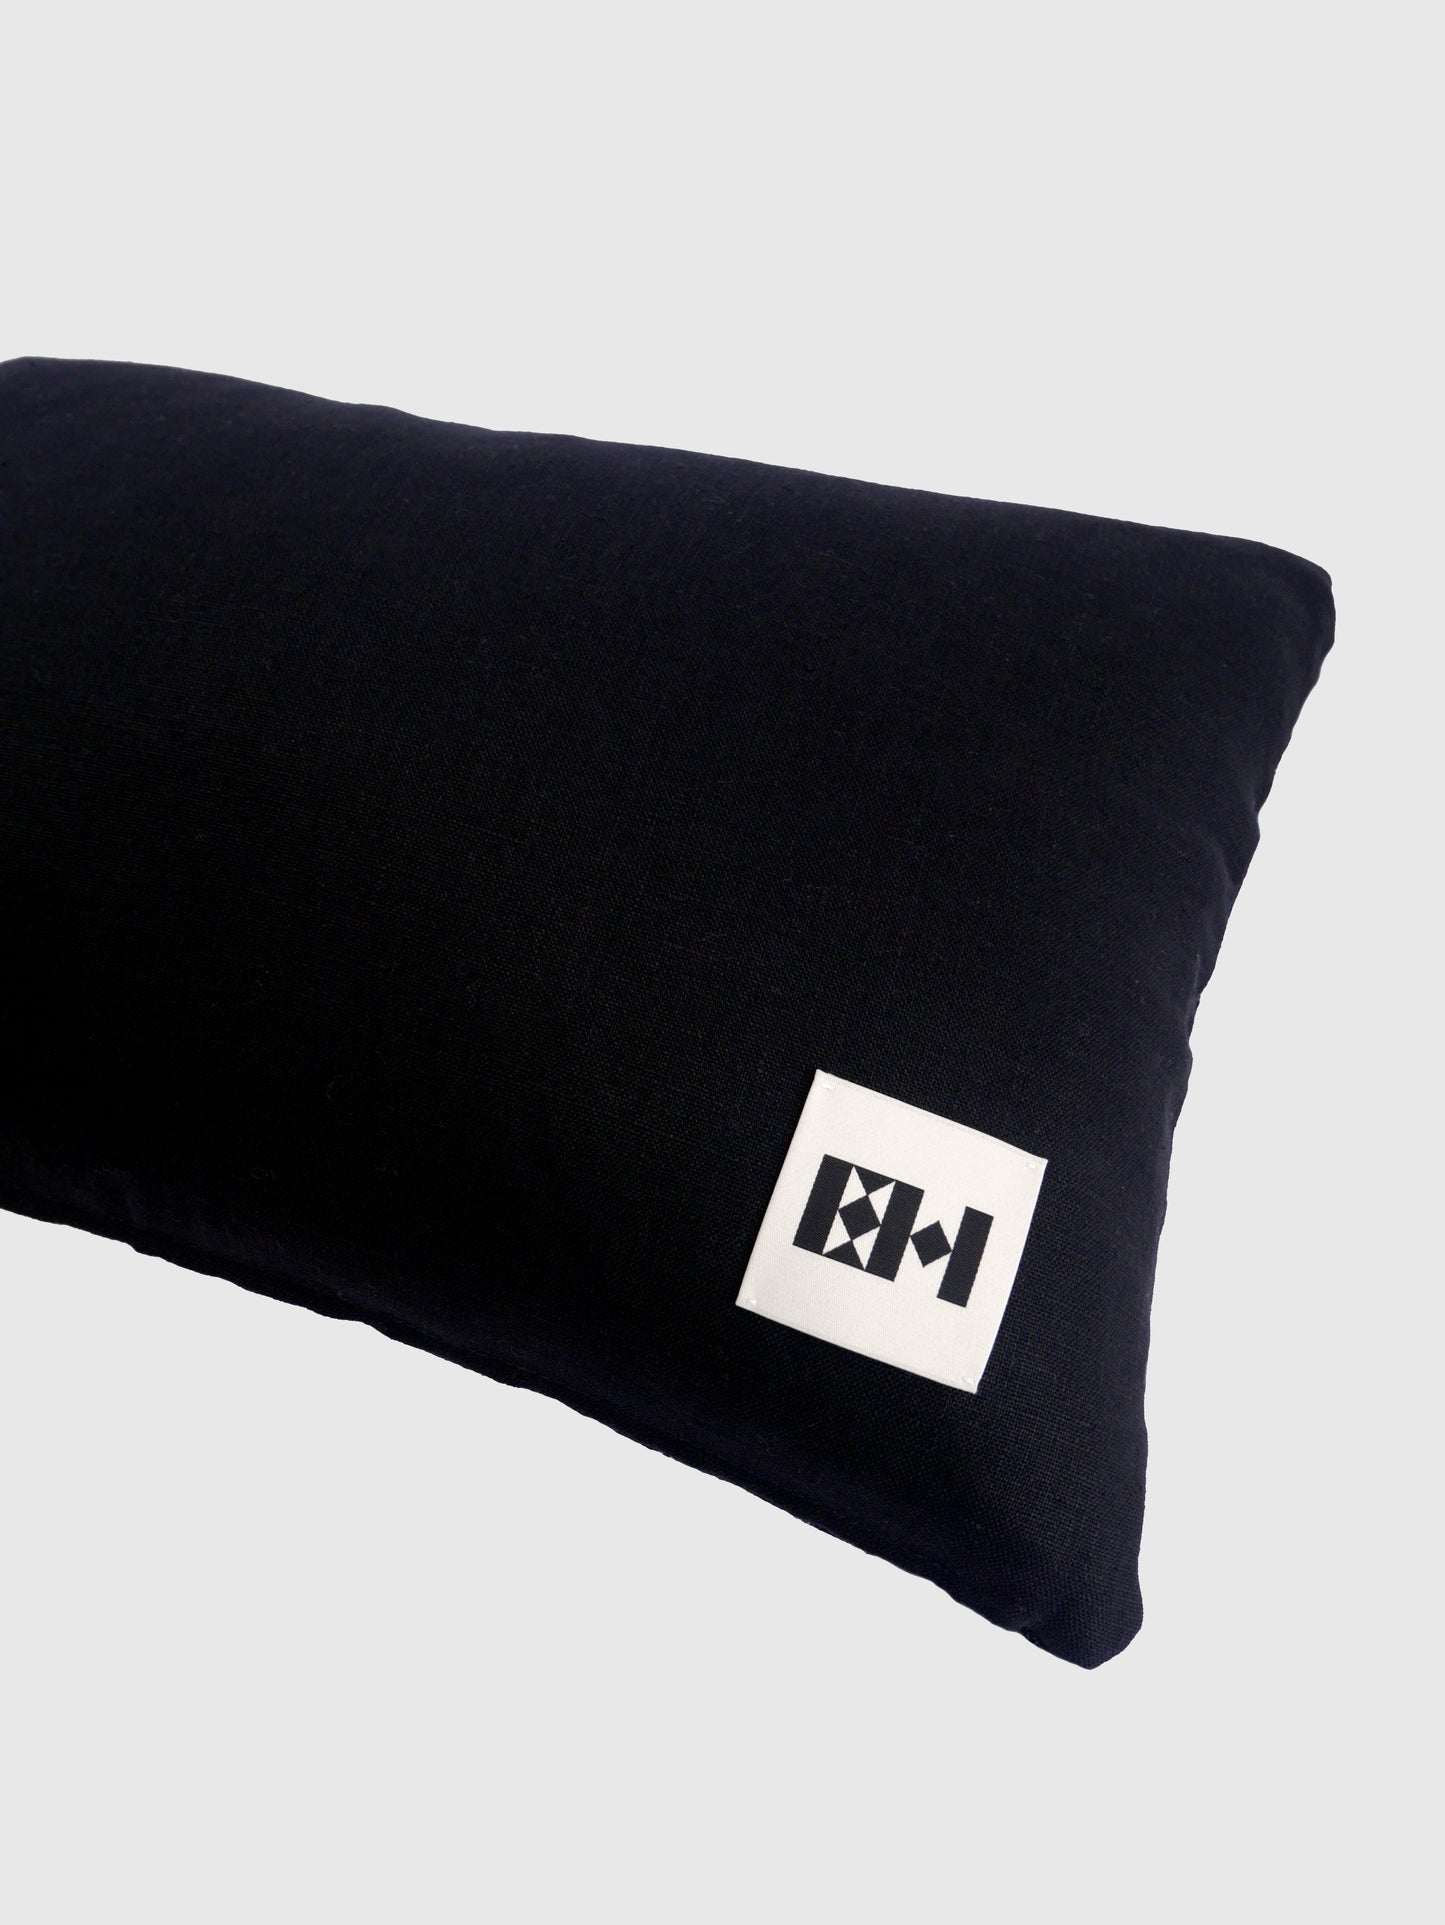 12" lumbar pillow by emma harling